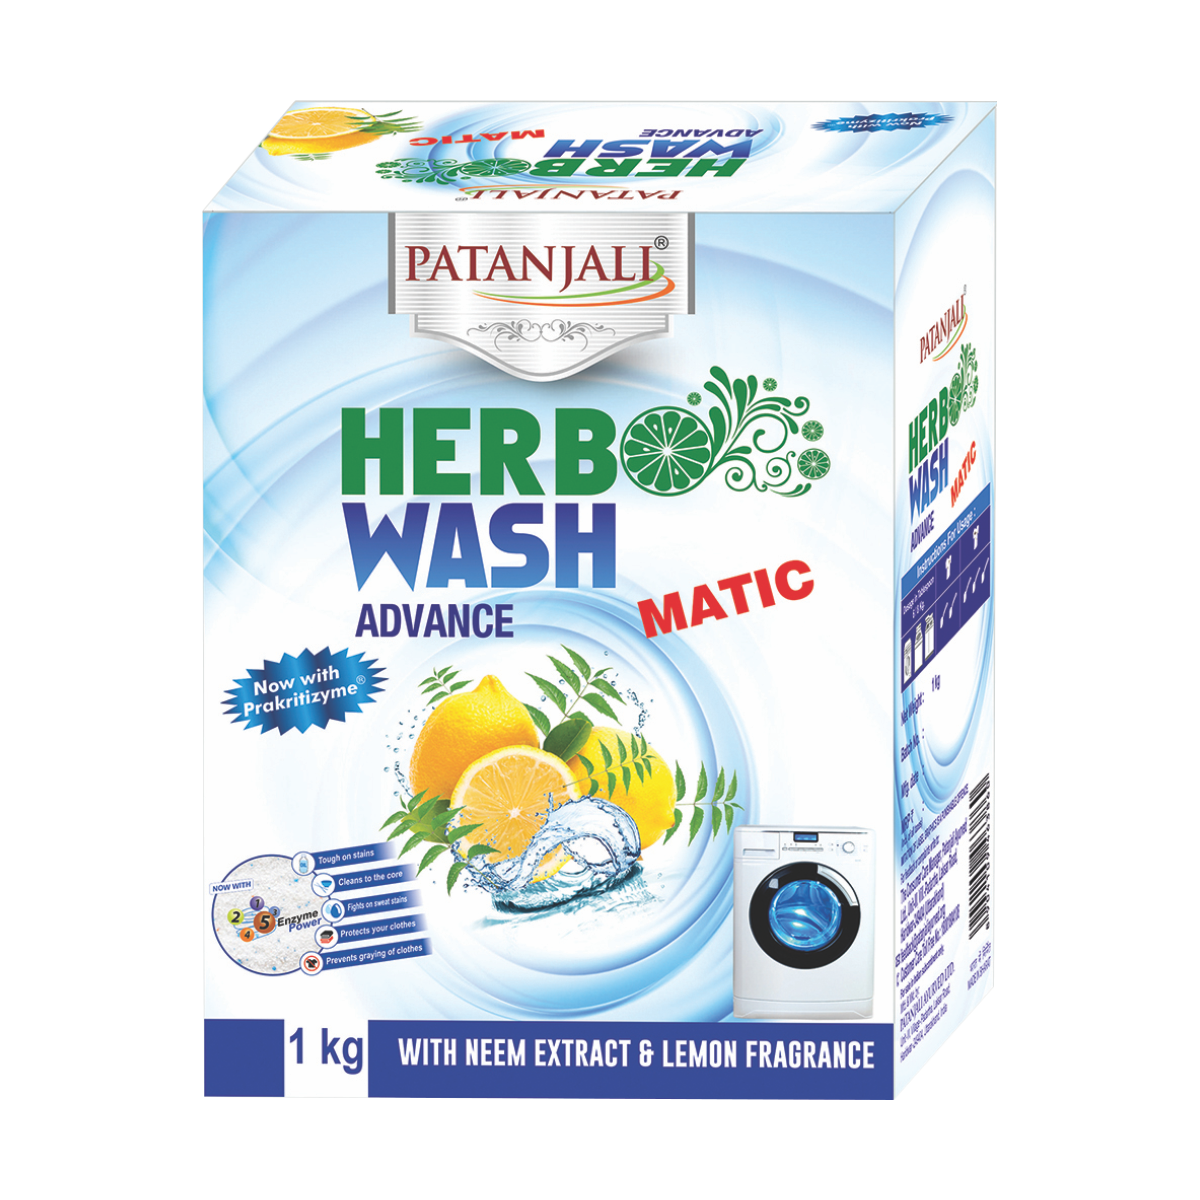 Patanjali Herbo Wash Advance Matic Detergent Powder